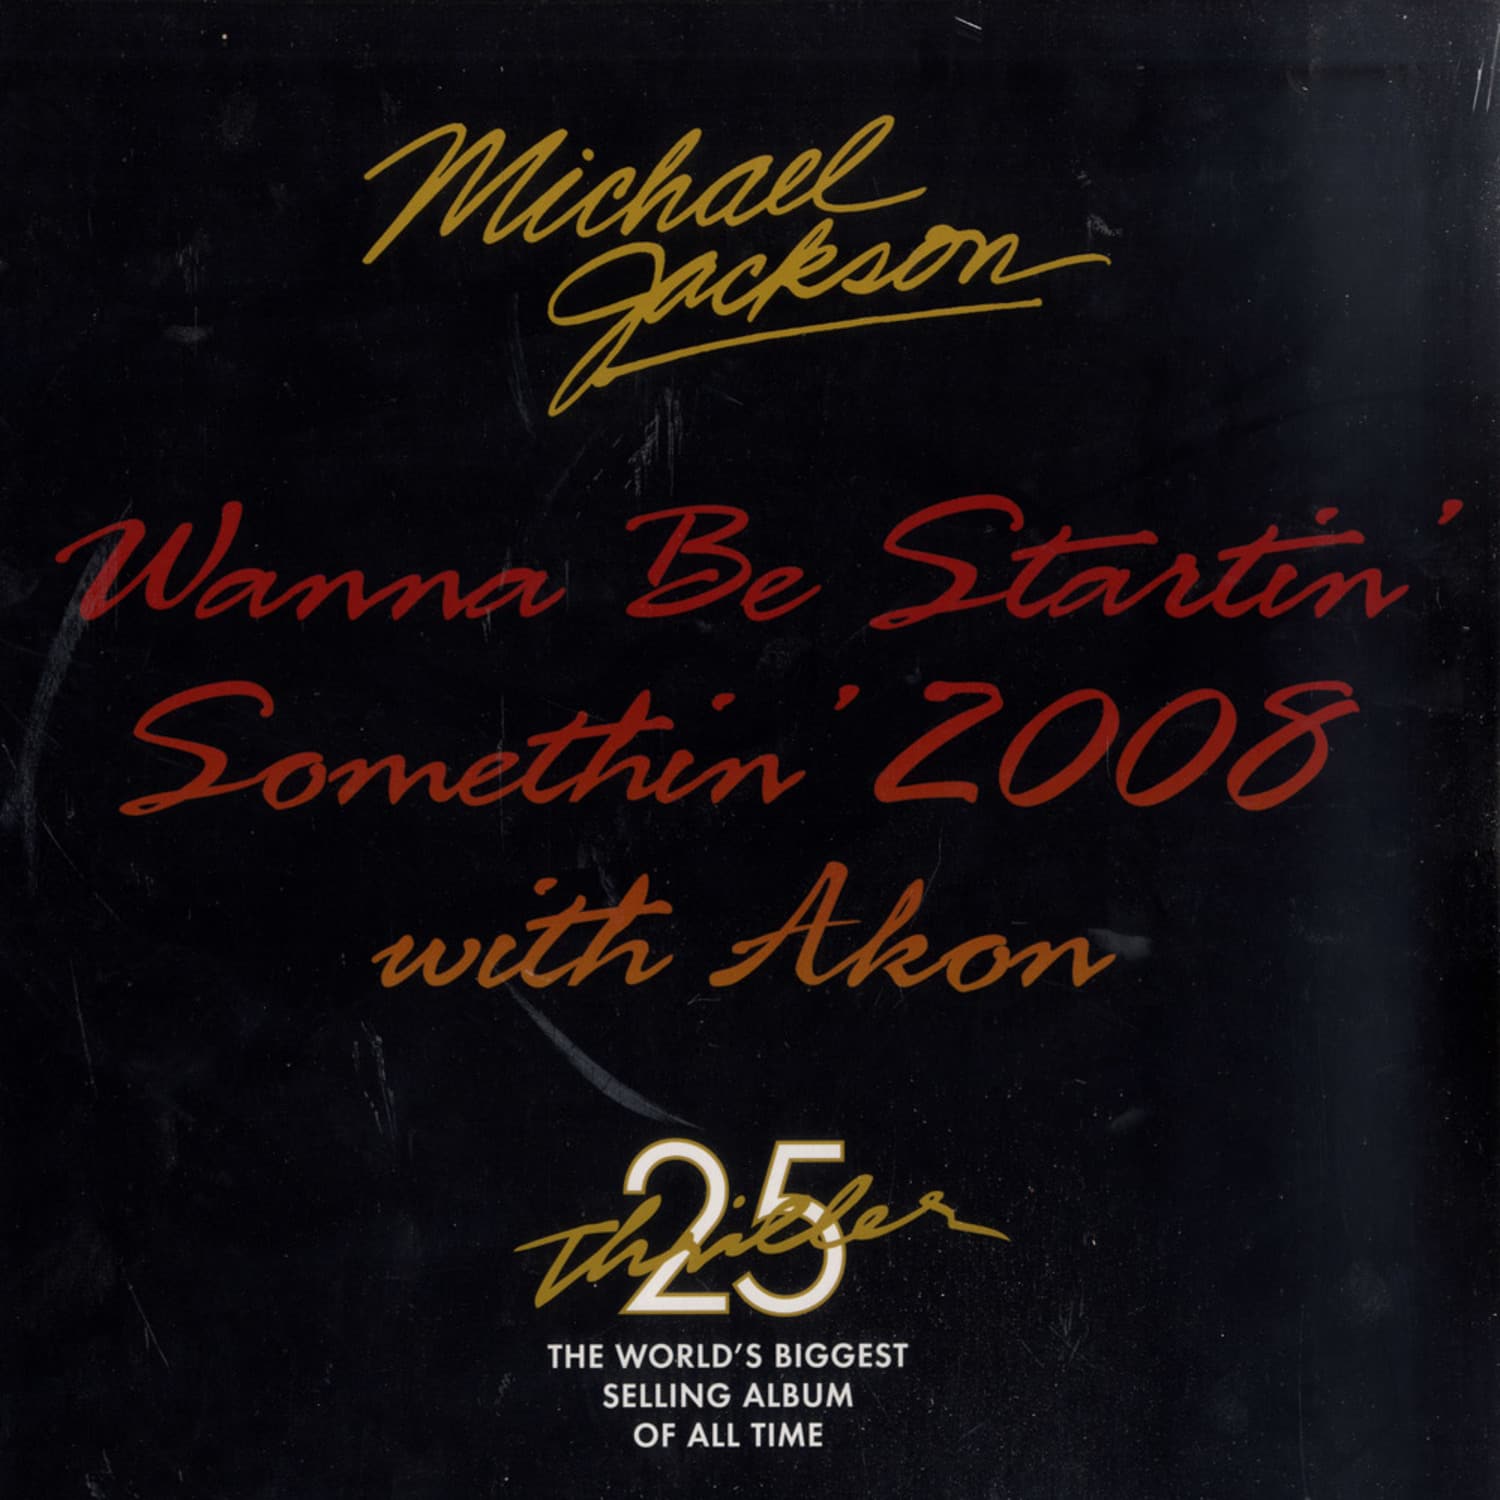 Michael Jackson - WANNA BE STARTIN SOMETHIN 2008